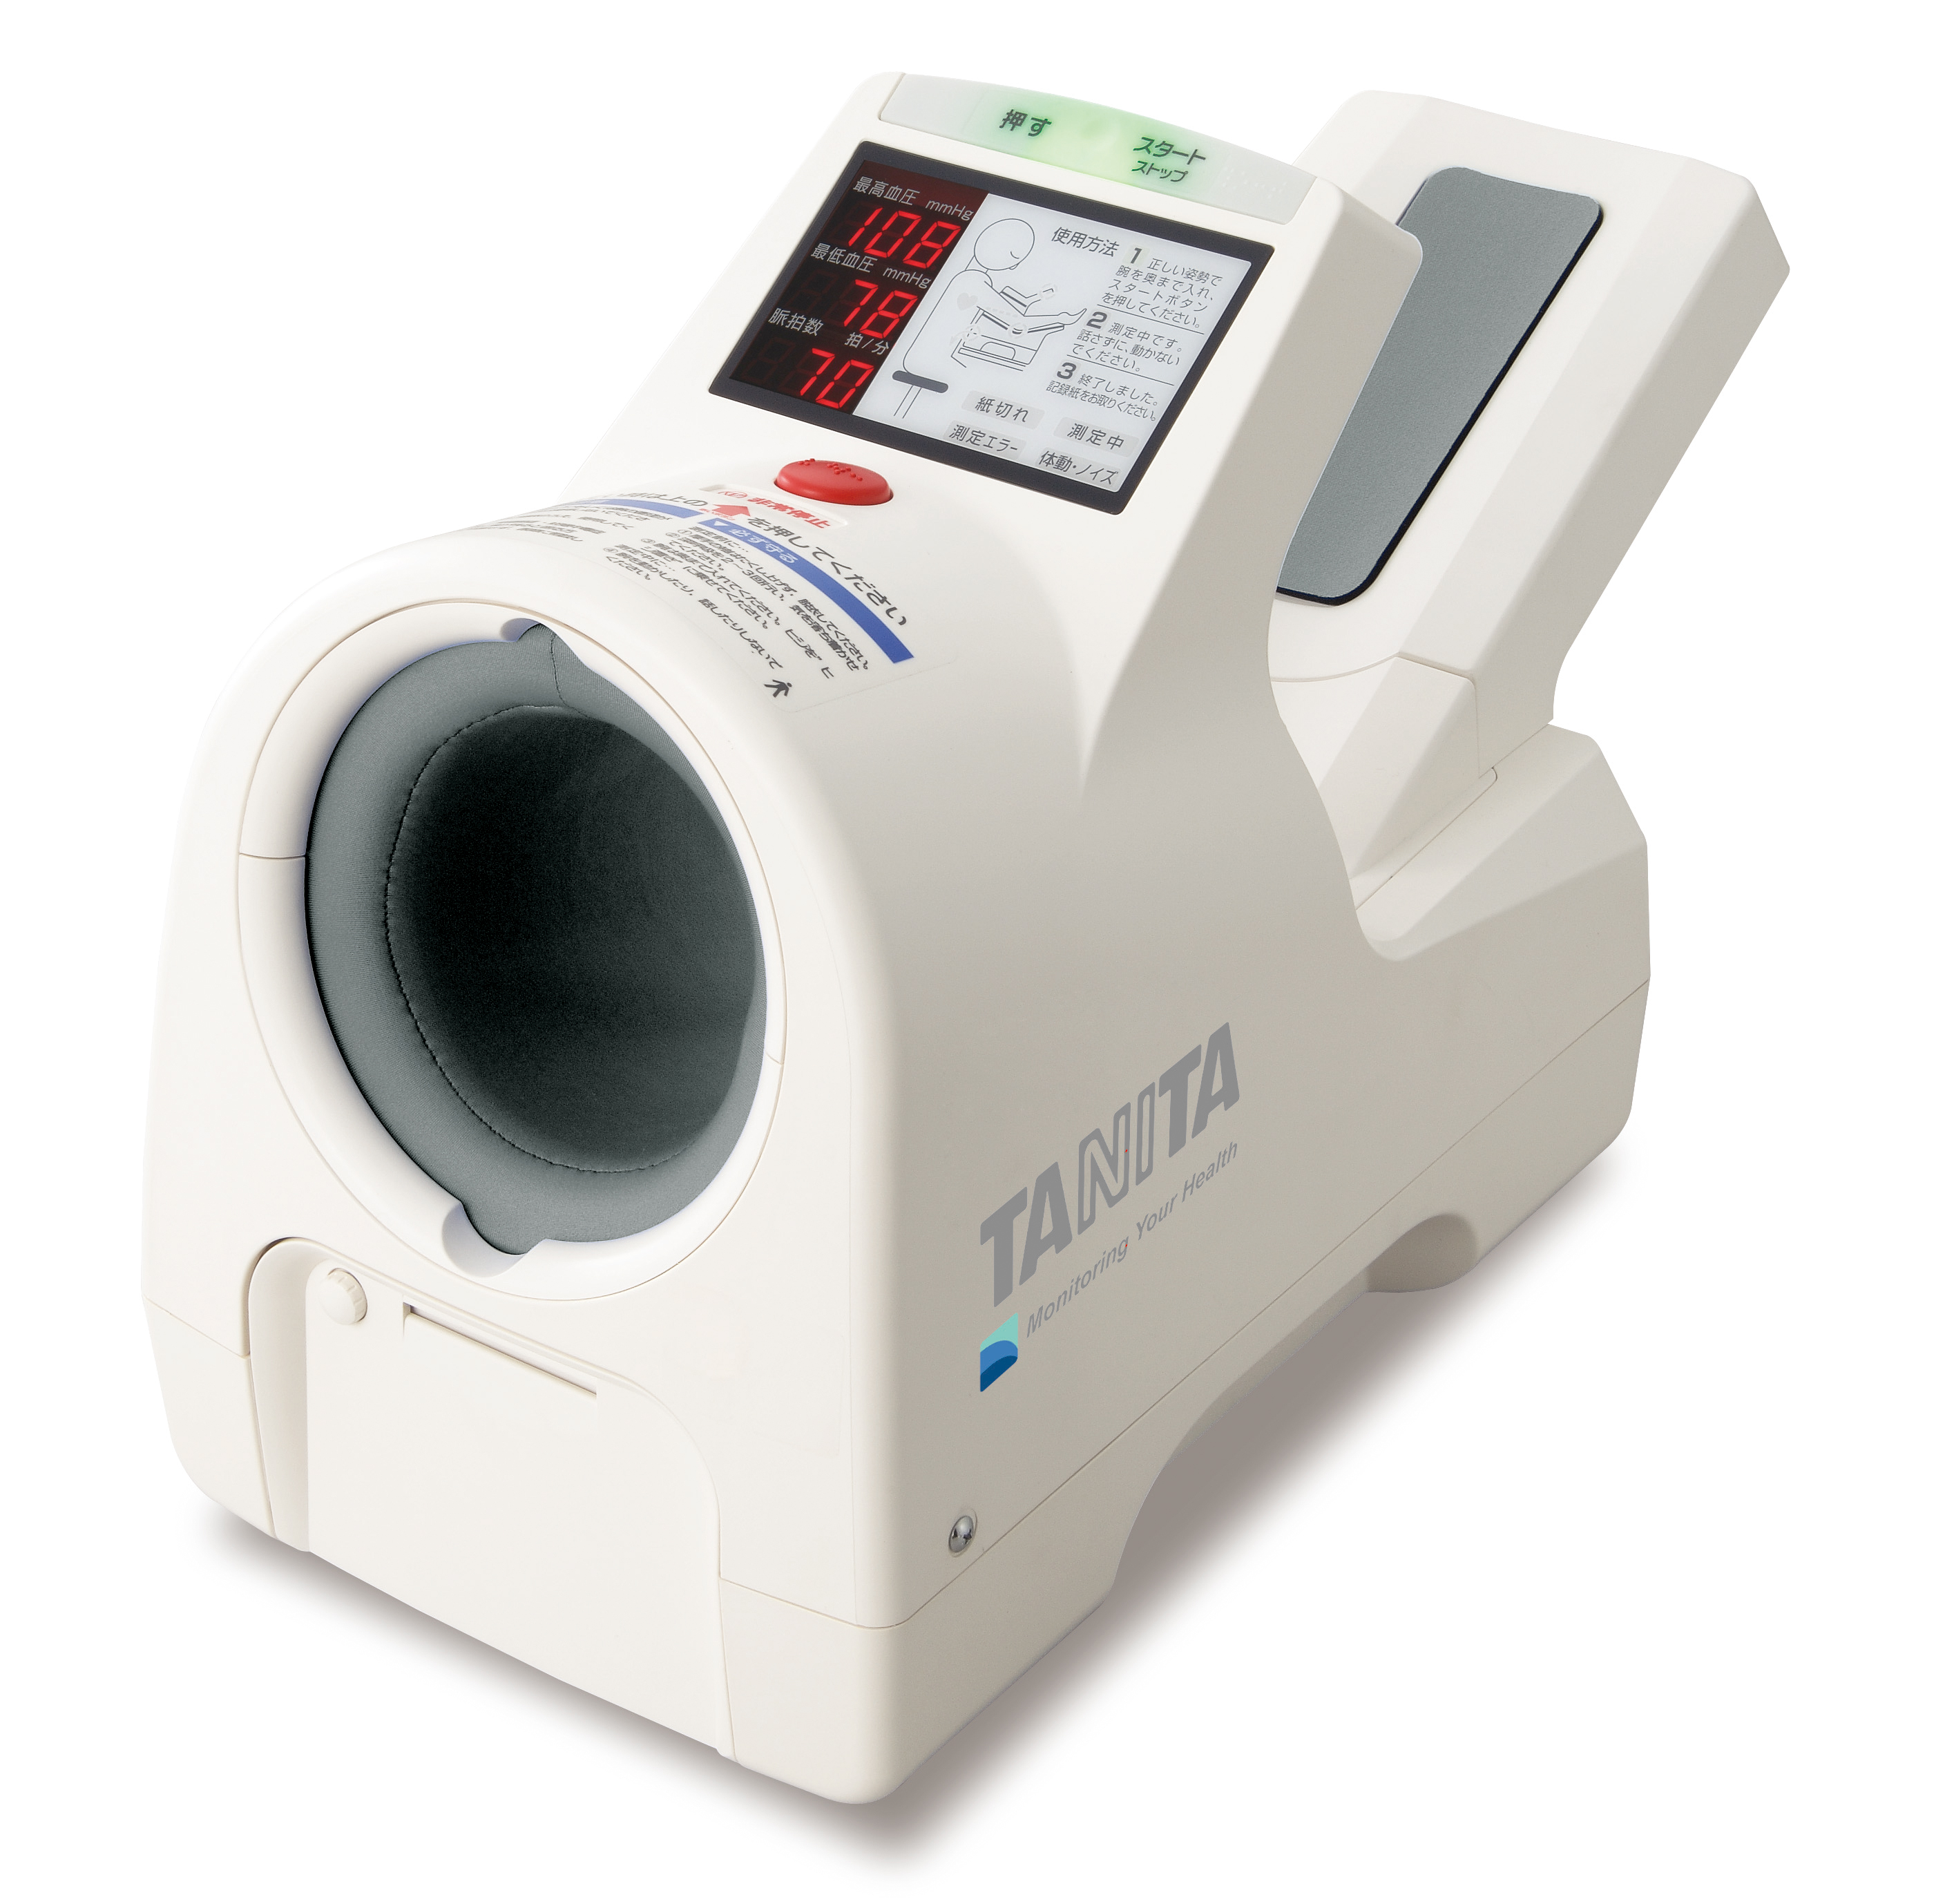 タニタ社製自動血圧計「業務用全自動血圧計」BP-900